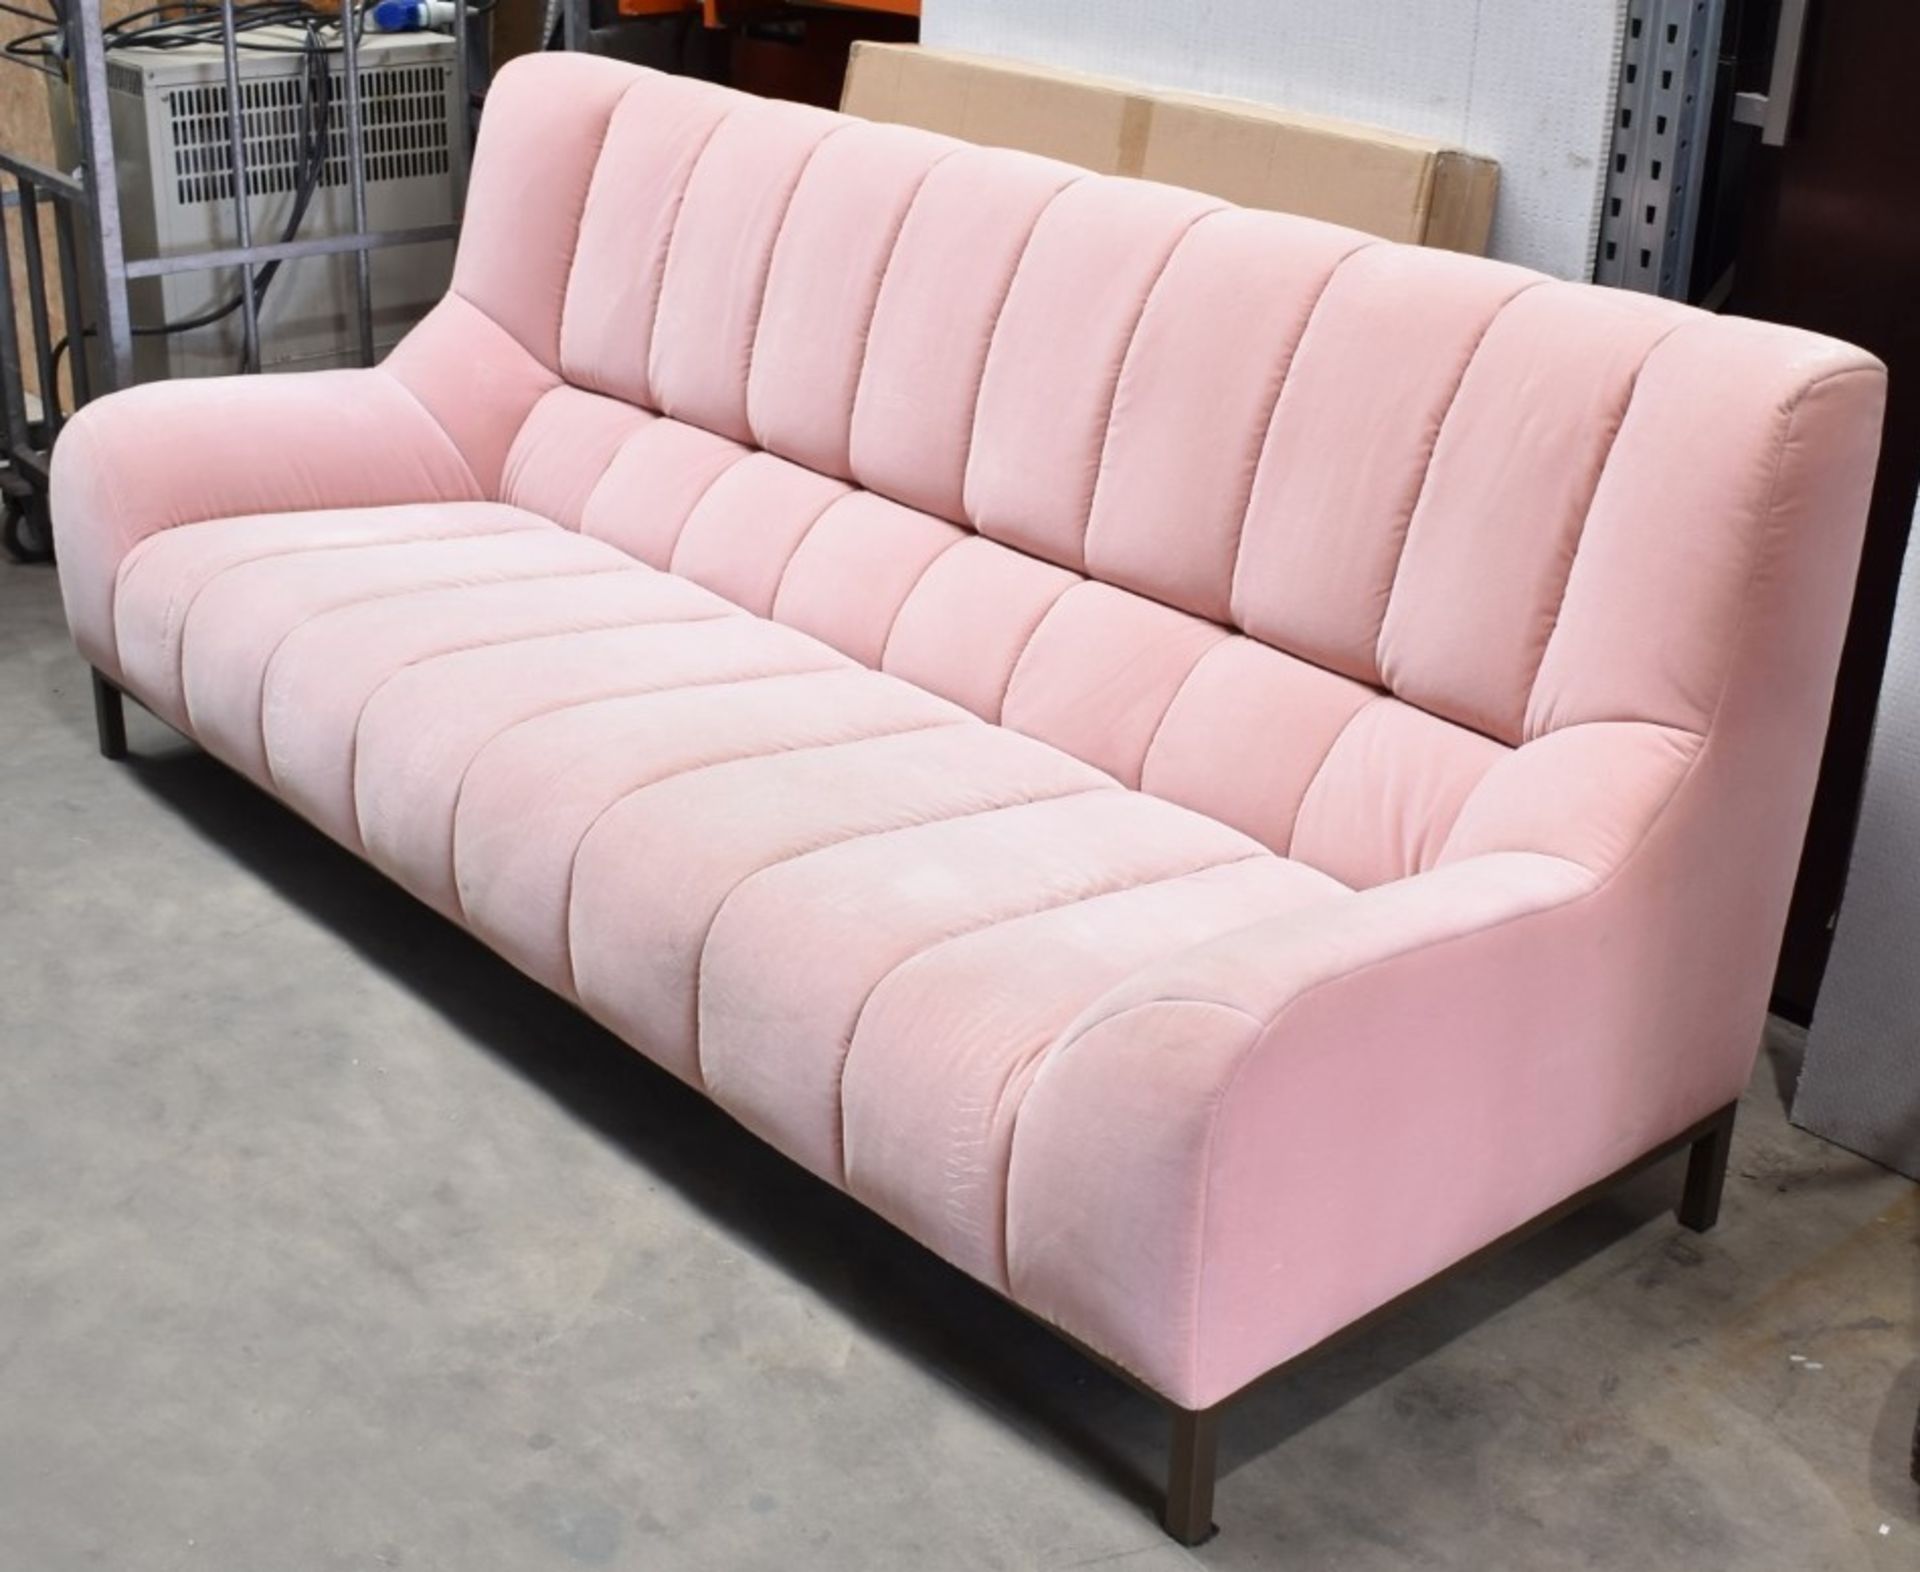 1 x LIGNE ROSET 'Phileas' Velvet Upholstered Designer 2.2-Metre Sofa, in Pale Pink - RRP £6,244 - Image 2 of 10